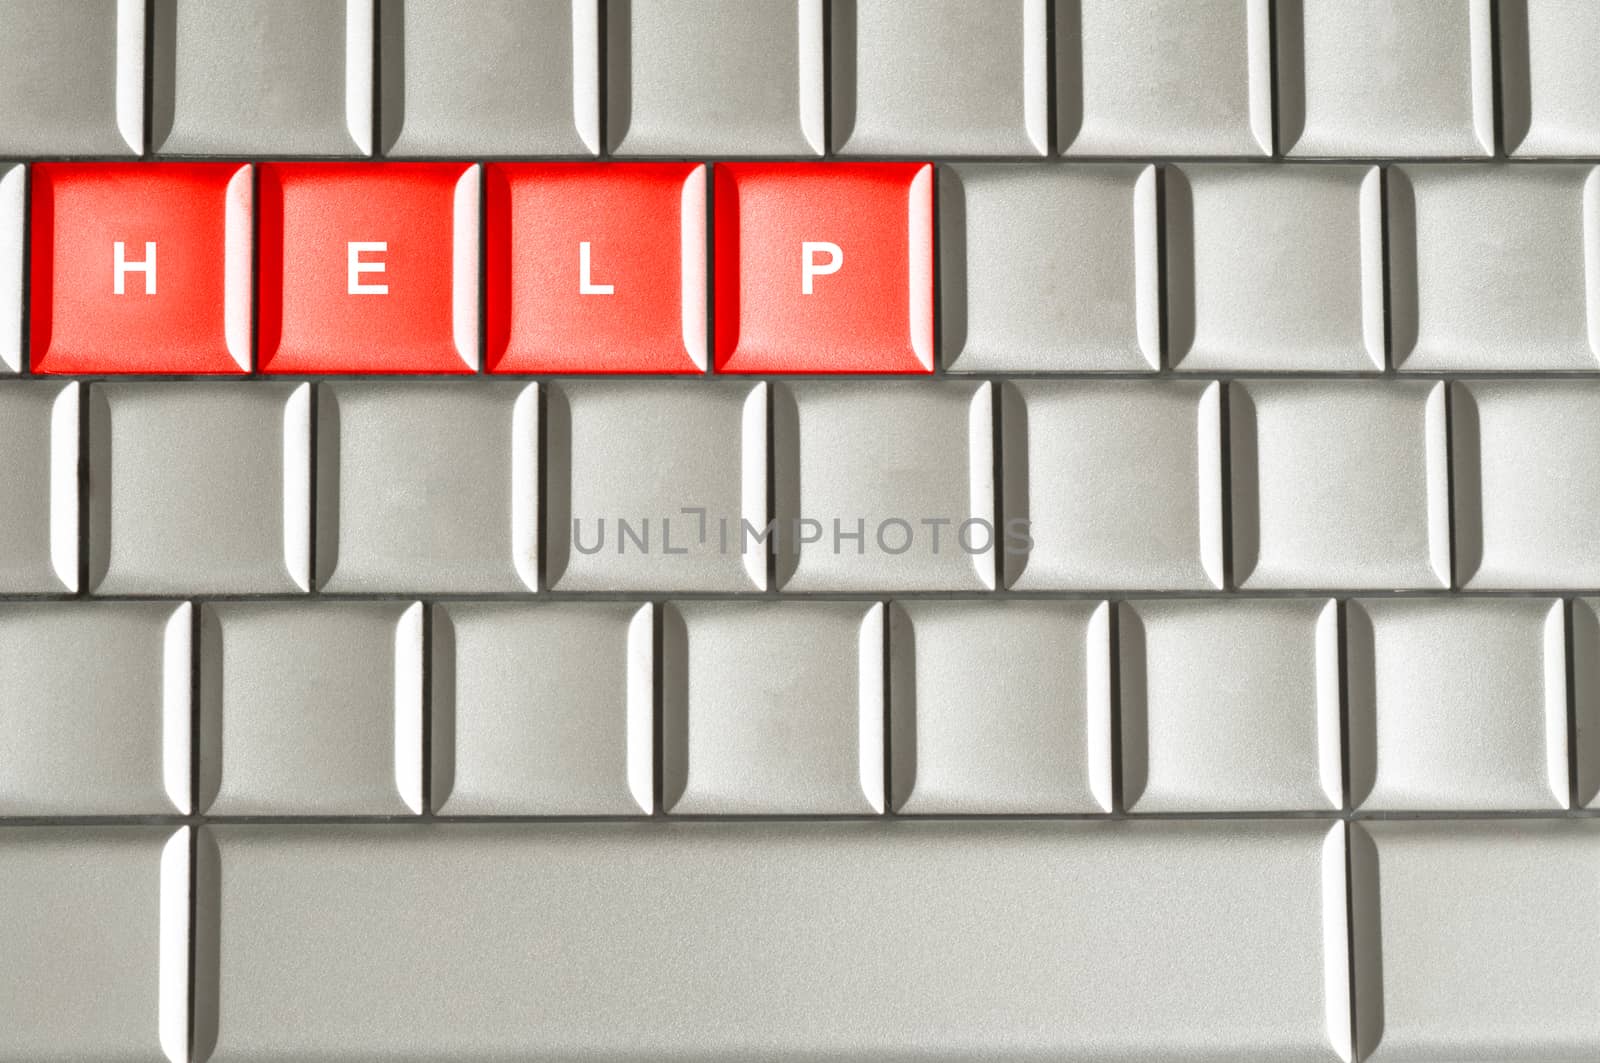 Help word spelled on a metallic keyboard